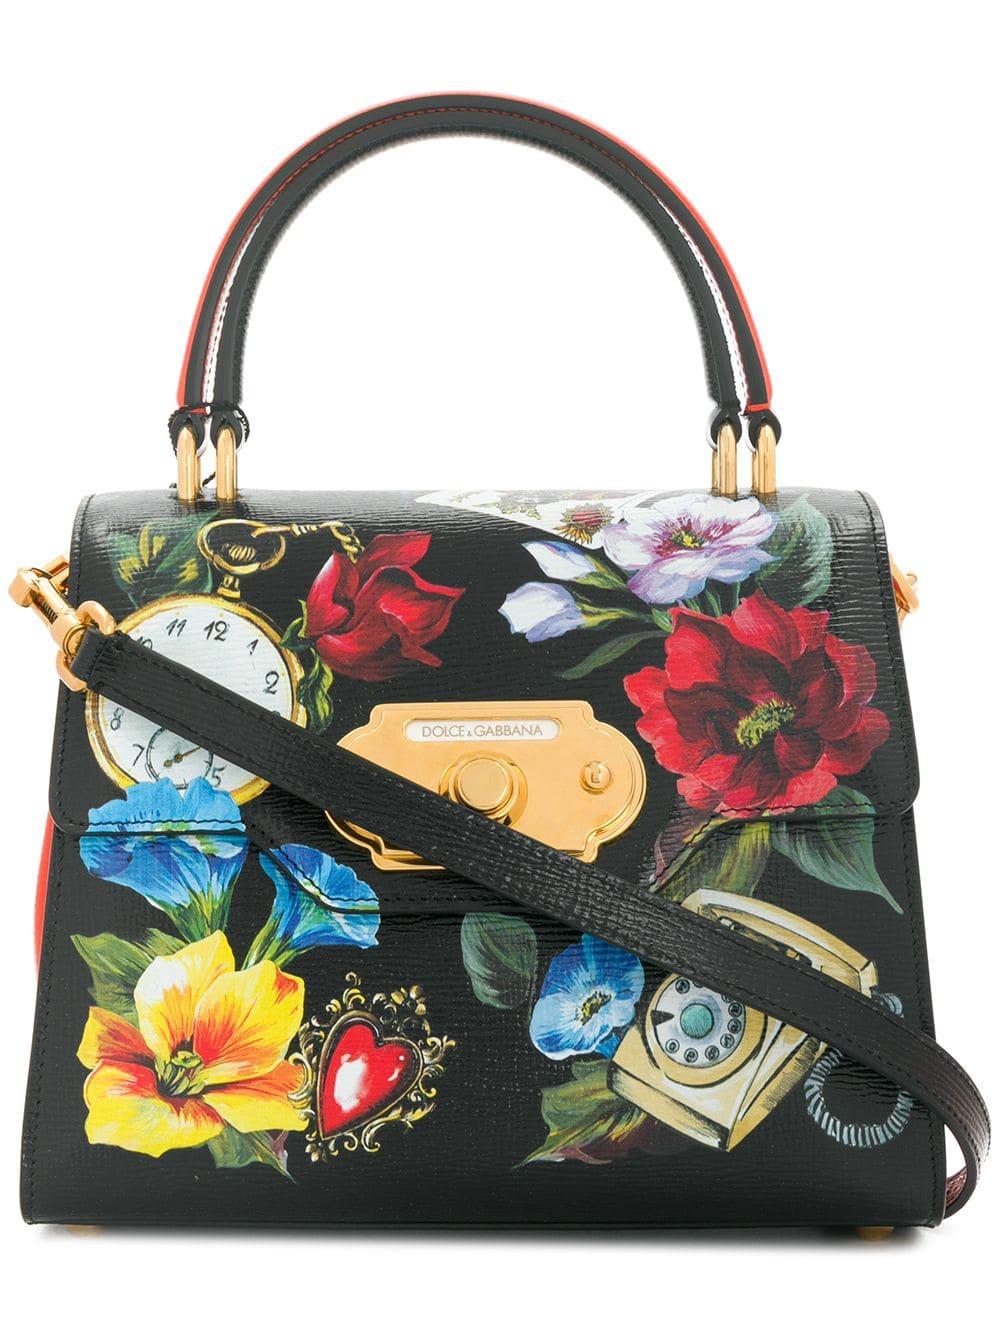 Dolce & Gabbana Welcome Tote Bag | ModeSens